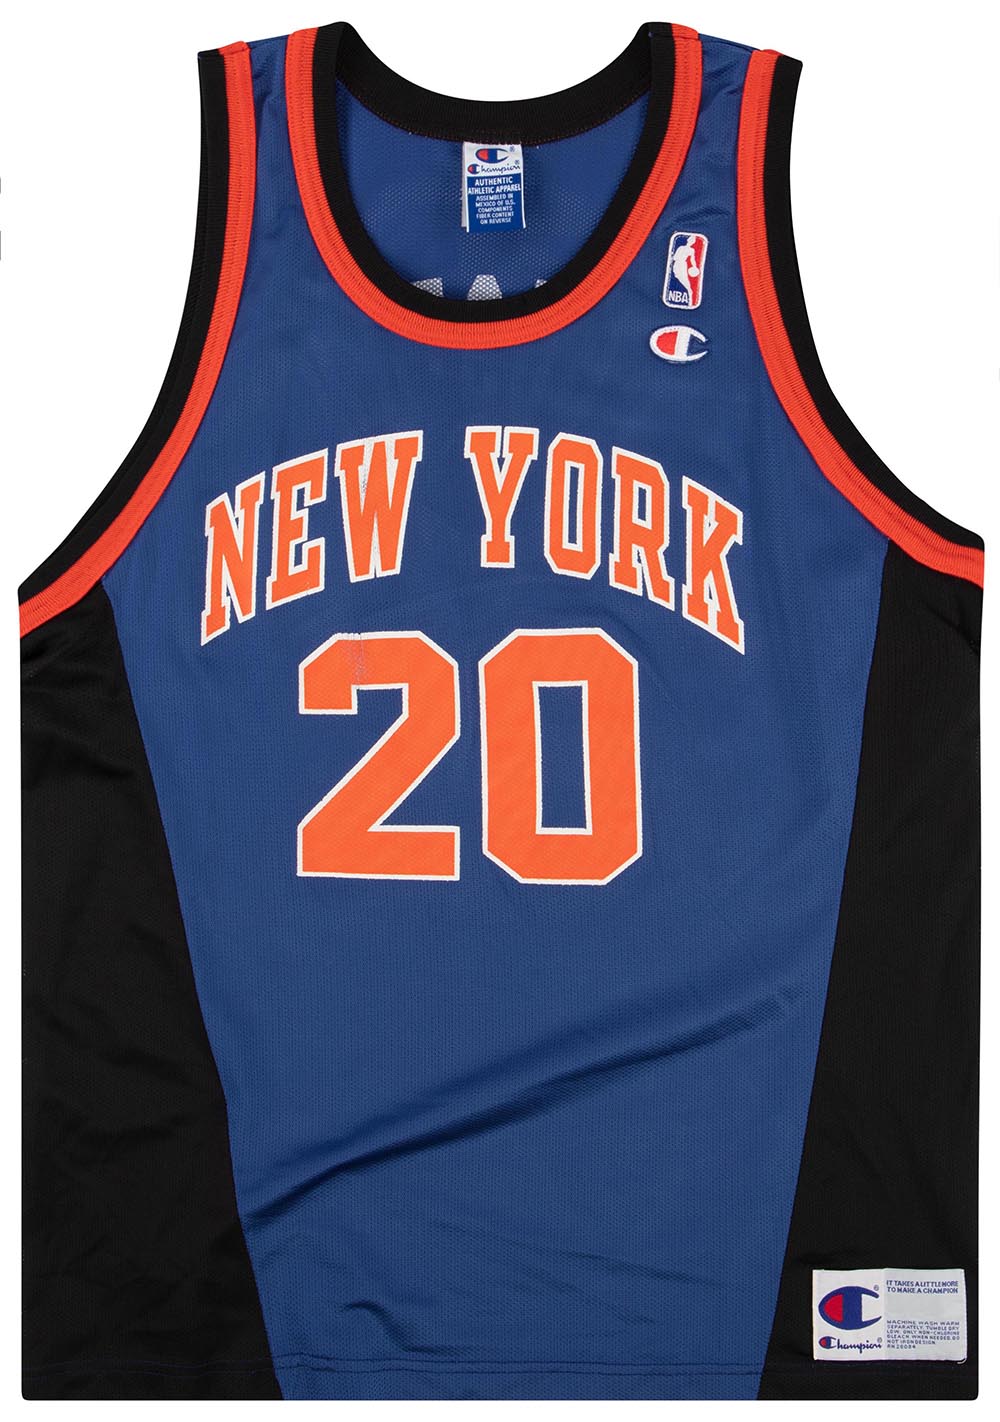 New York Knicks Jerseys - Where to Buy Them